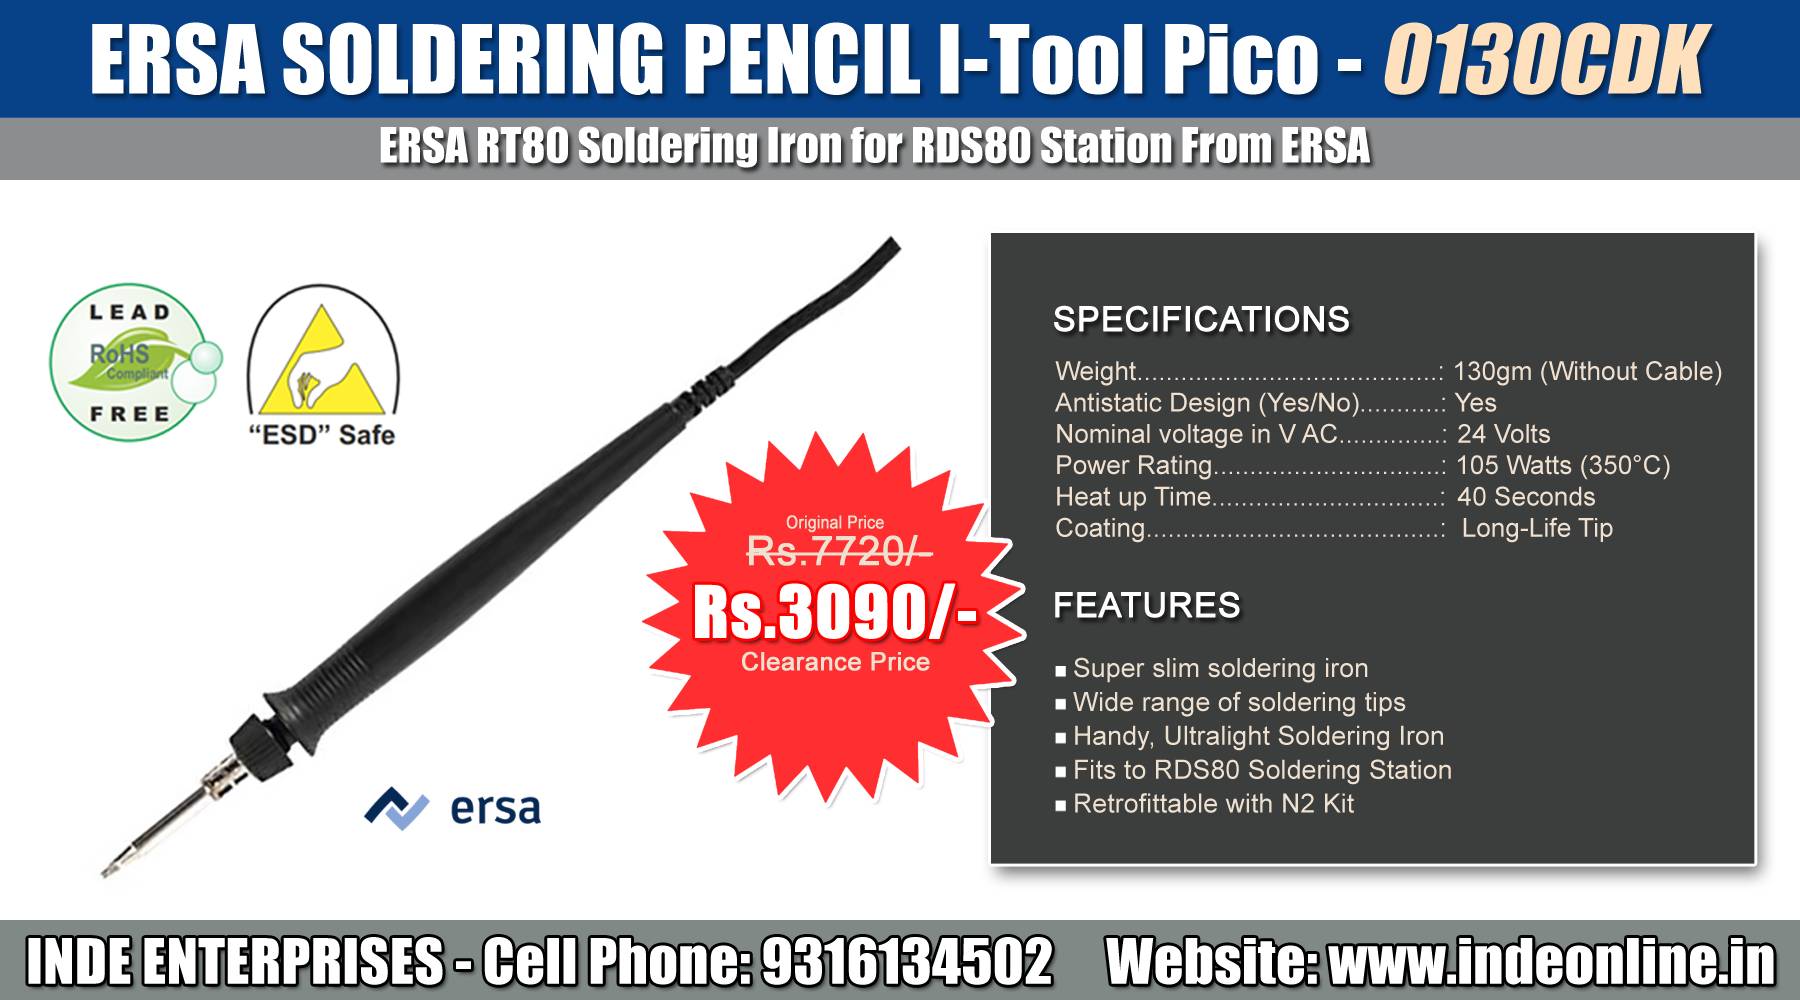 ERSA Soldering Iron - i-Tool Pico 0130CDK Price Rs.3090/-